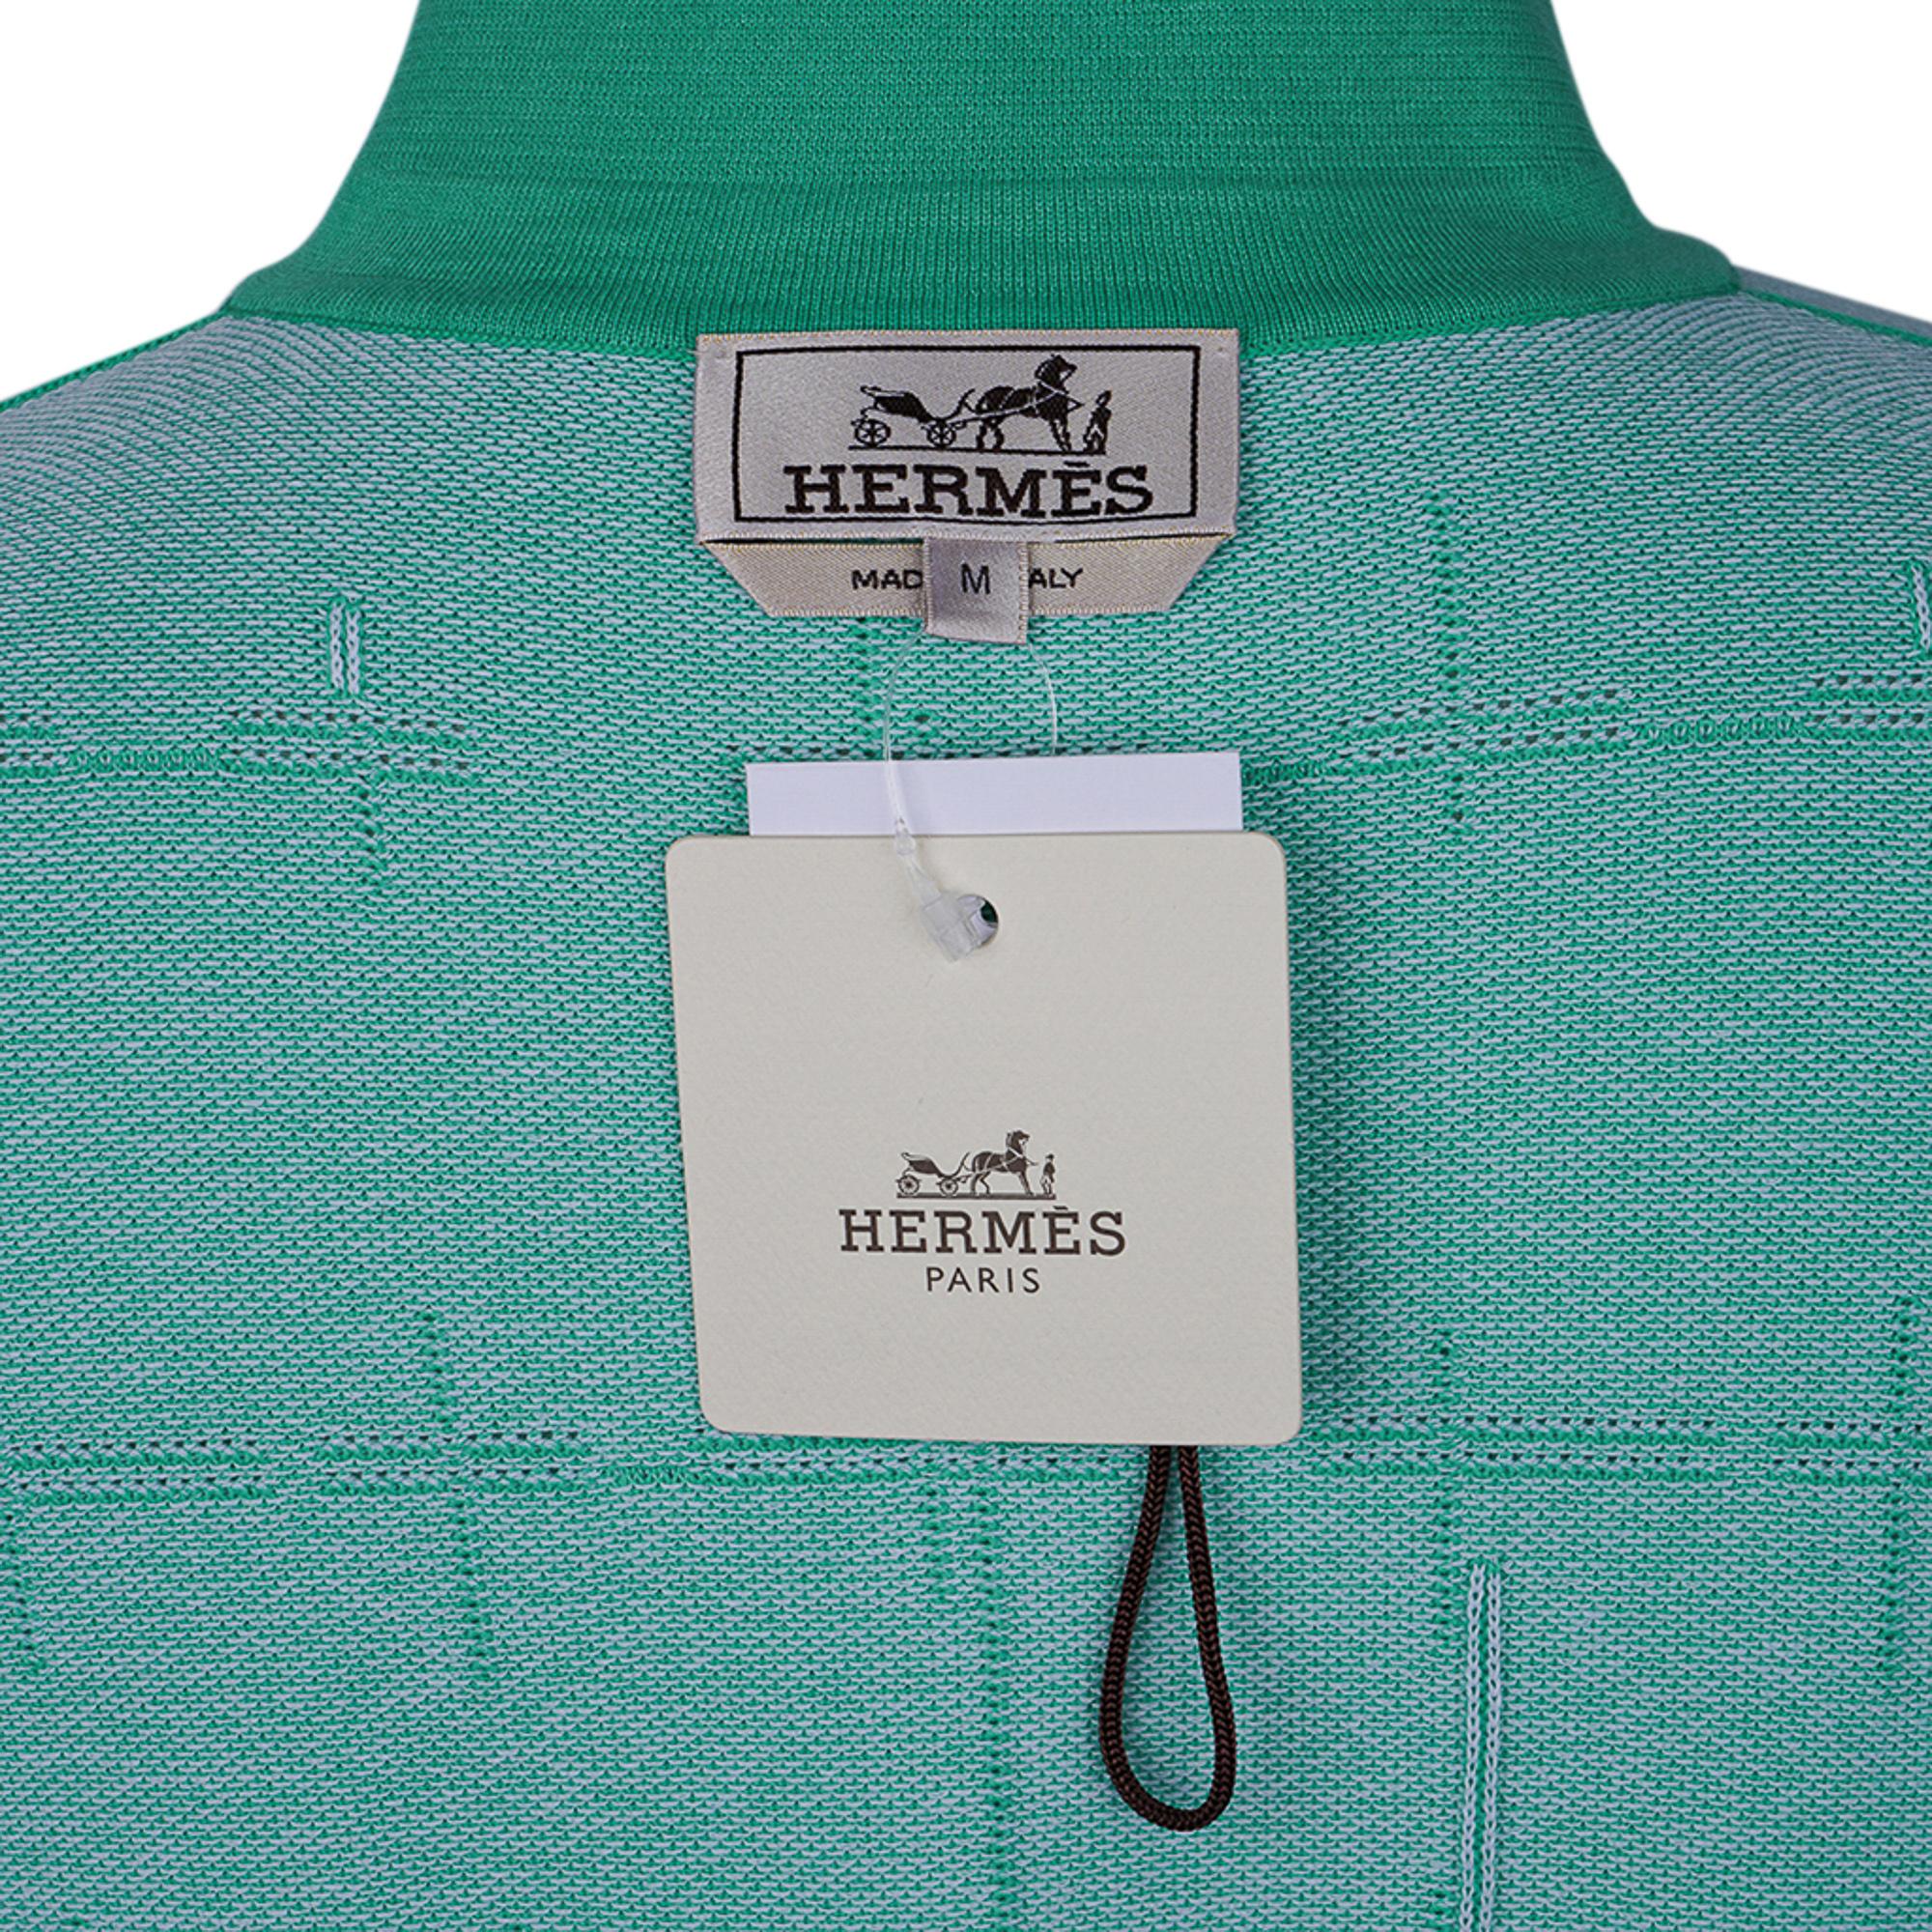 Hermes Men's H en Carreaux Boxy Fit Polo Shirt Vert Tendre Short Sleeve M For Sale 2